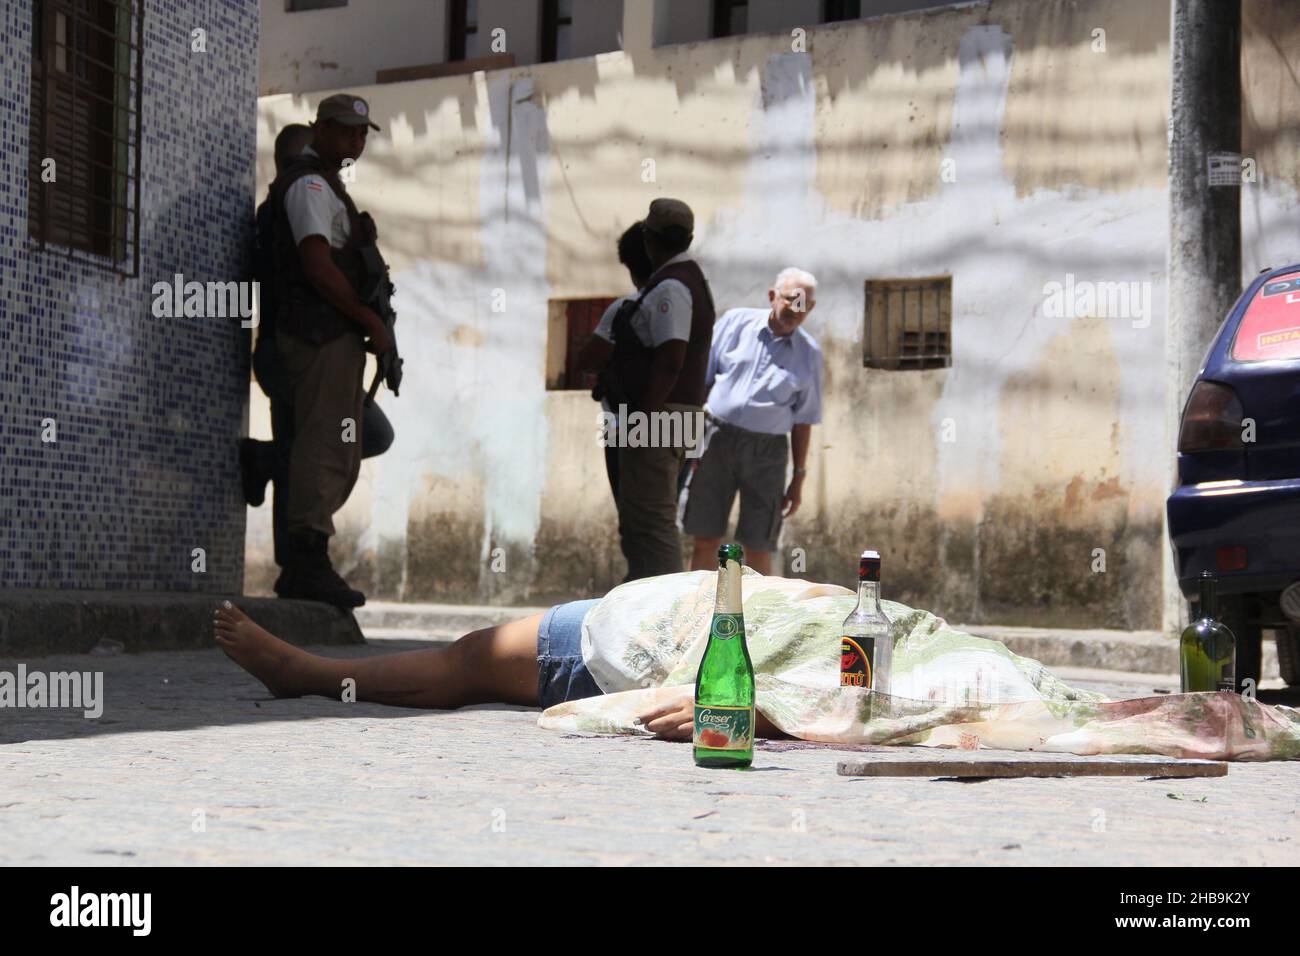 salvador, bahia, brazil - january 1, 2014: Police investigate a homicide site in the city of Salvador. Stock Photo